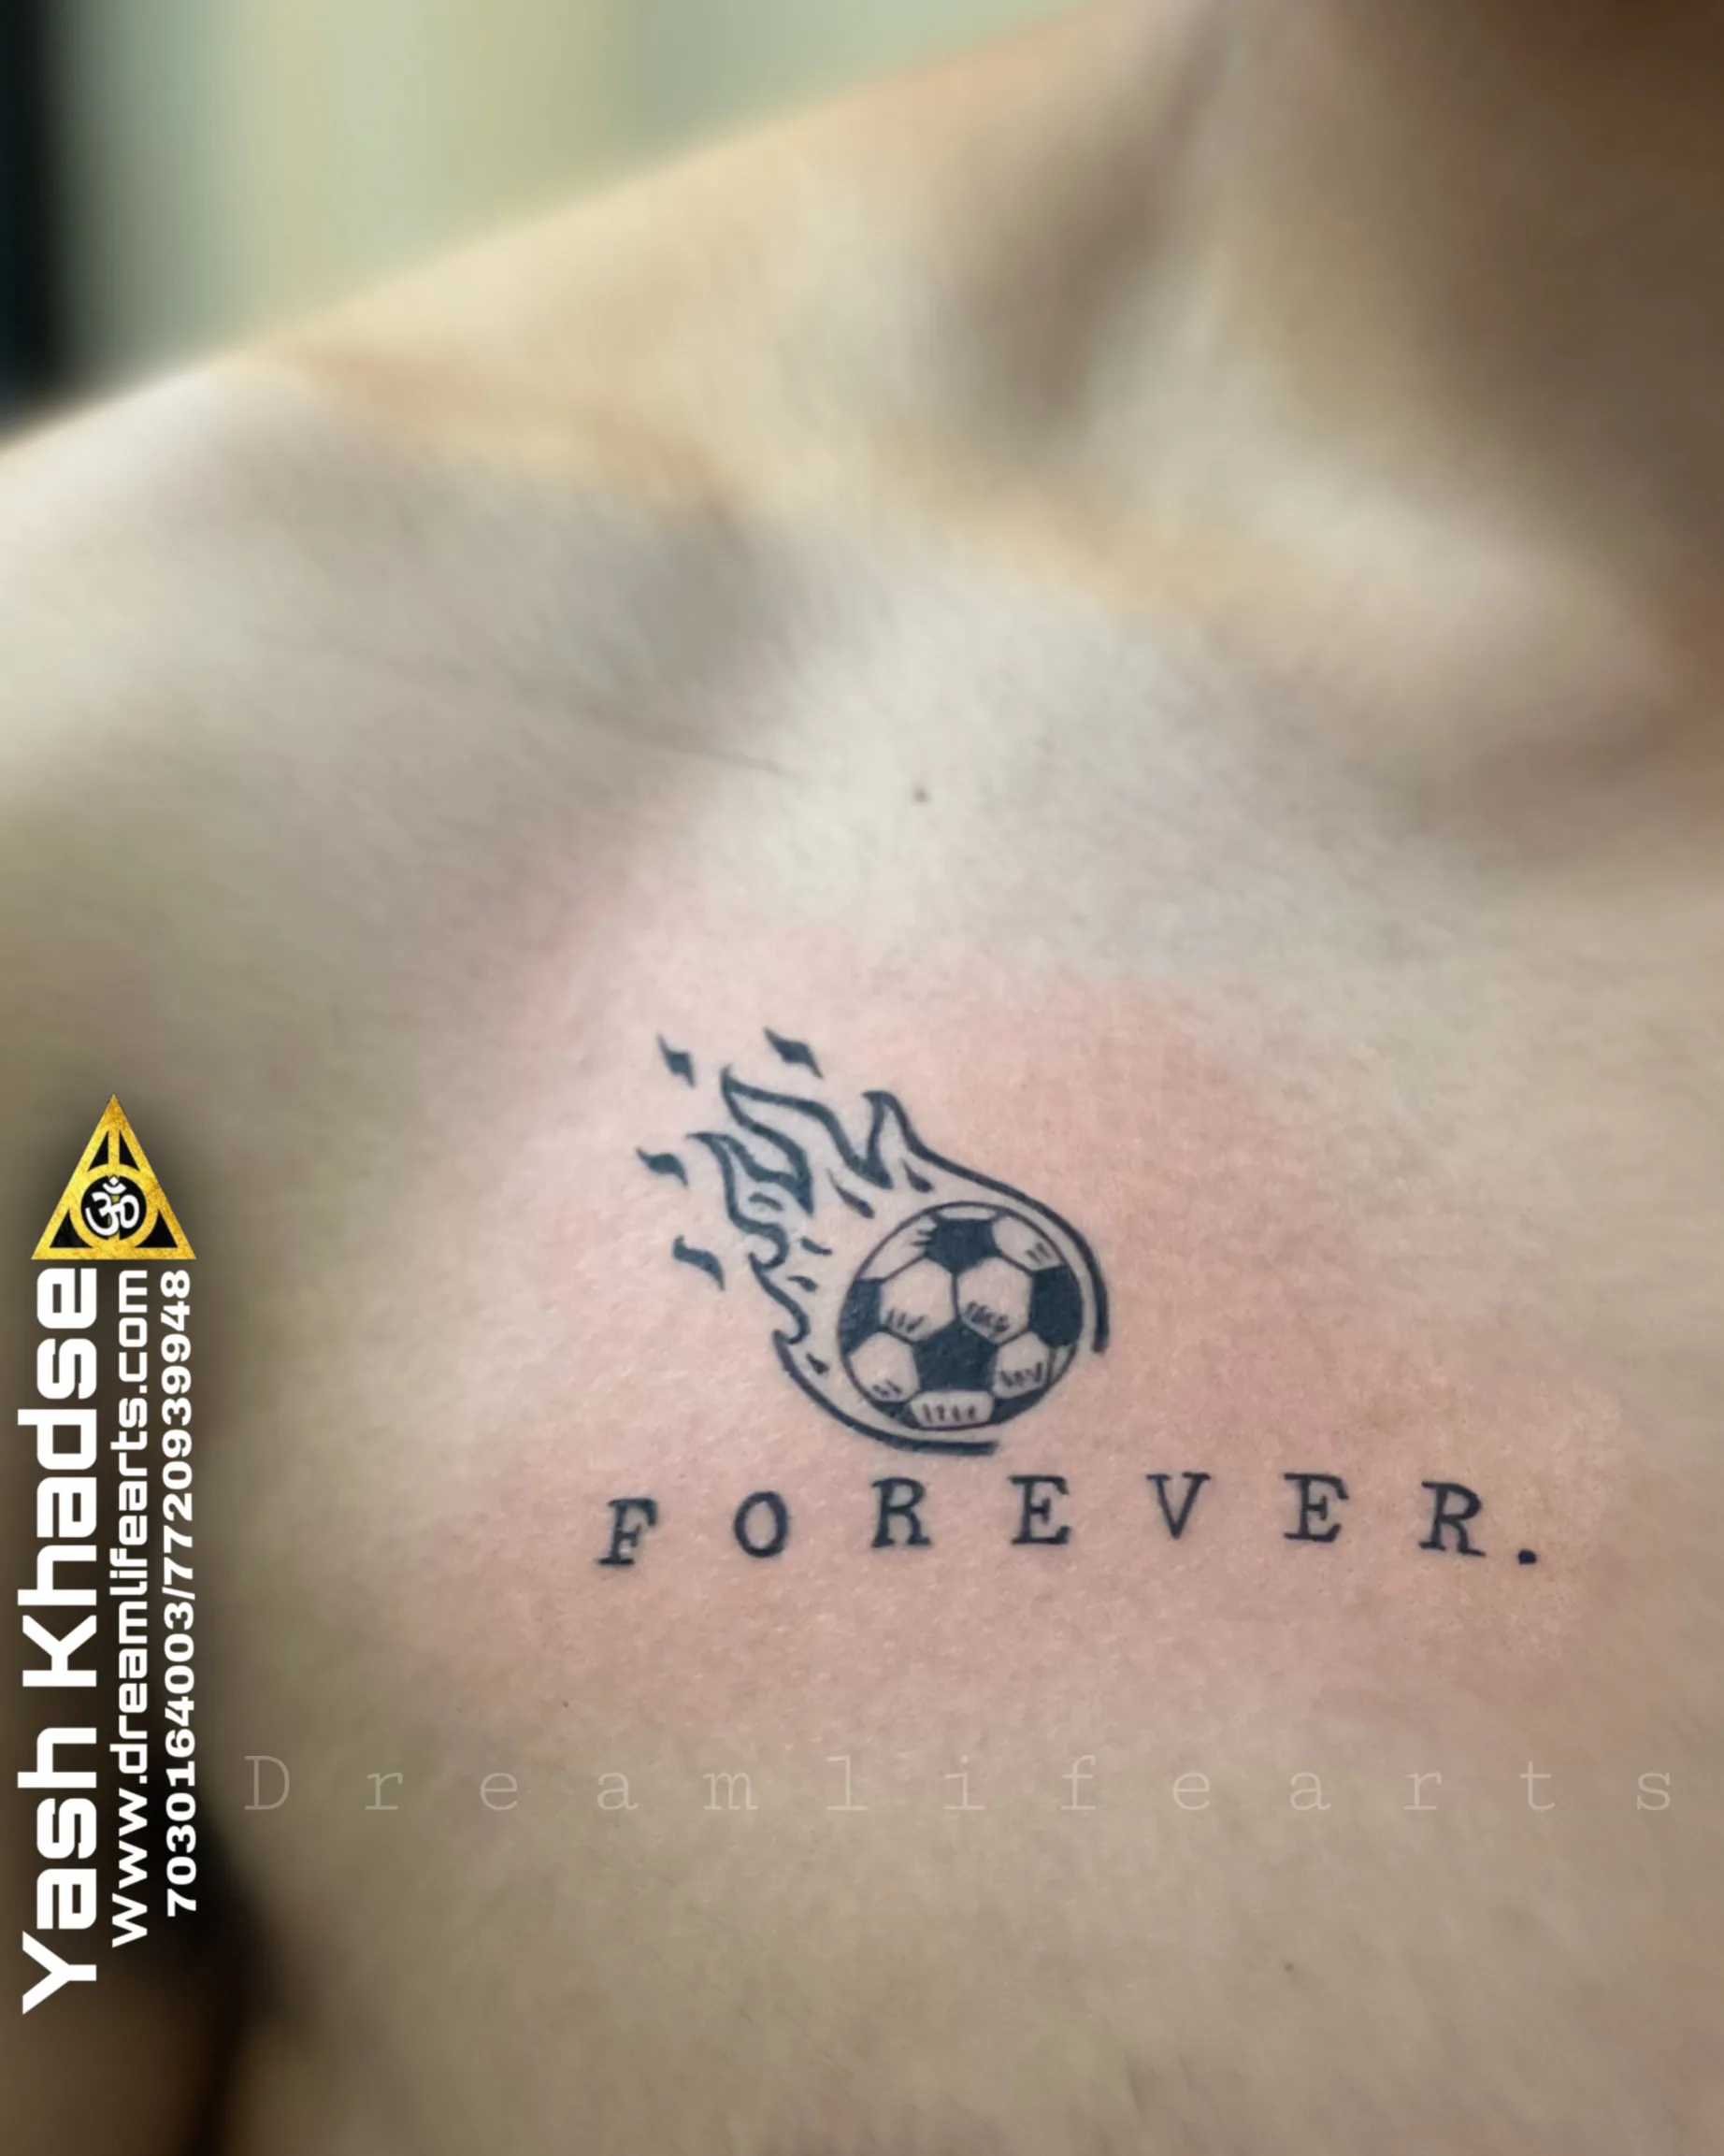 Soccer Tattoo Design Ideas Images | Soccer tattoos, Tattoos, Tattoo designs